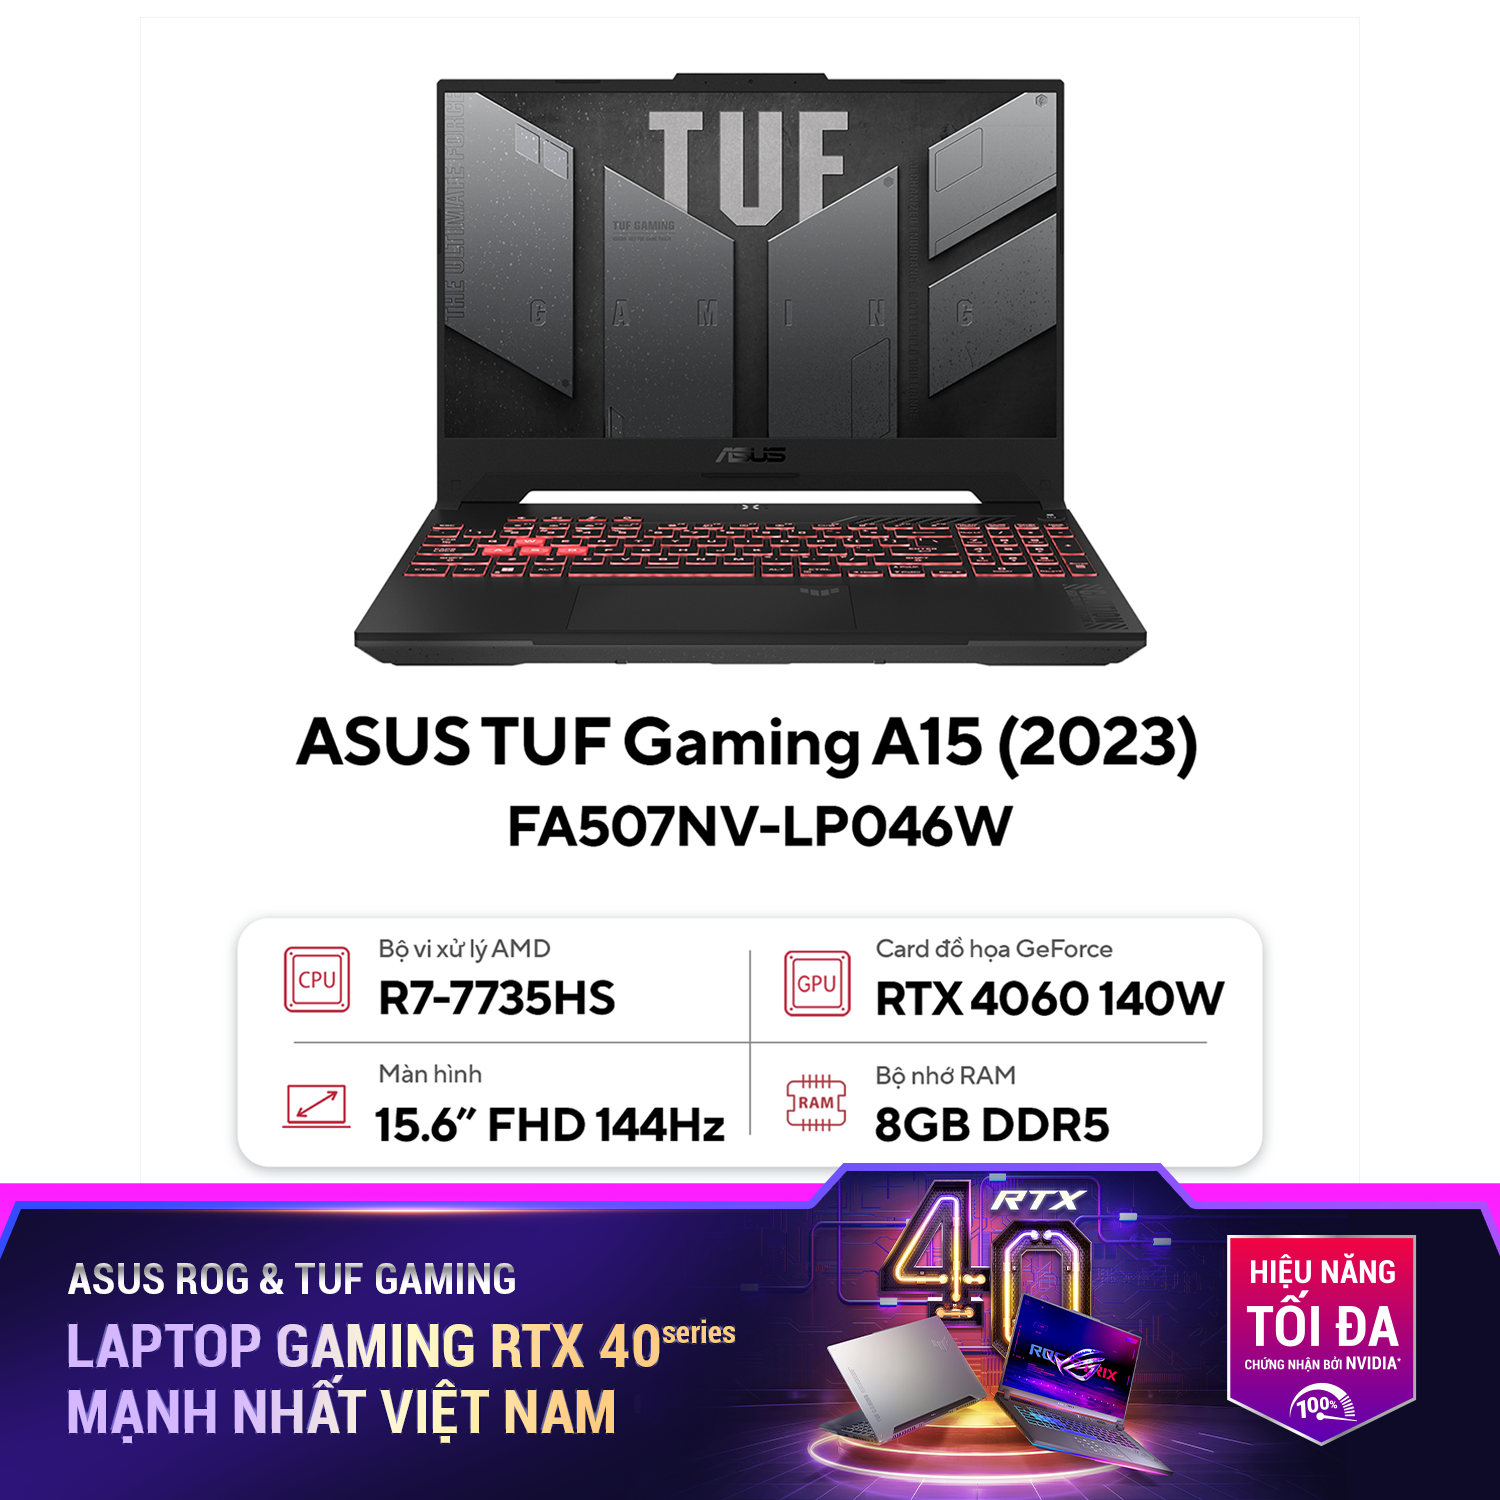 ASUS TUF Gaming A15 #AMD